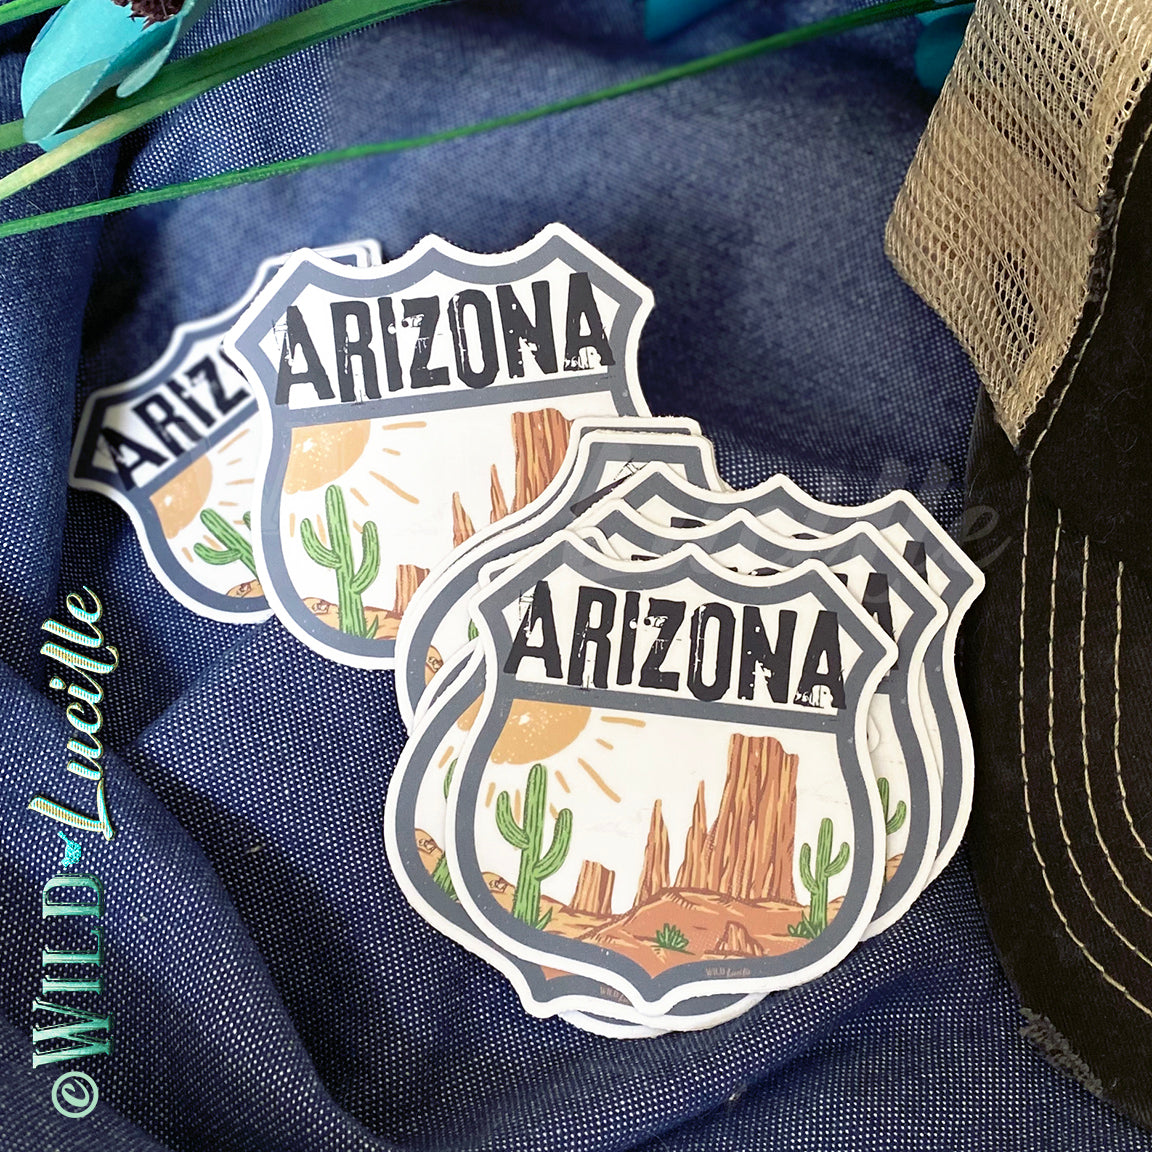 Destination Arizona - Vinyl Souvenir Travel Decals